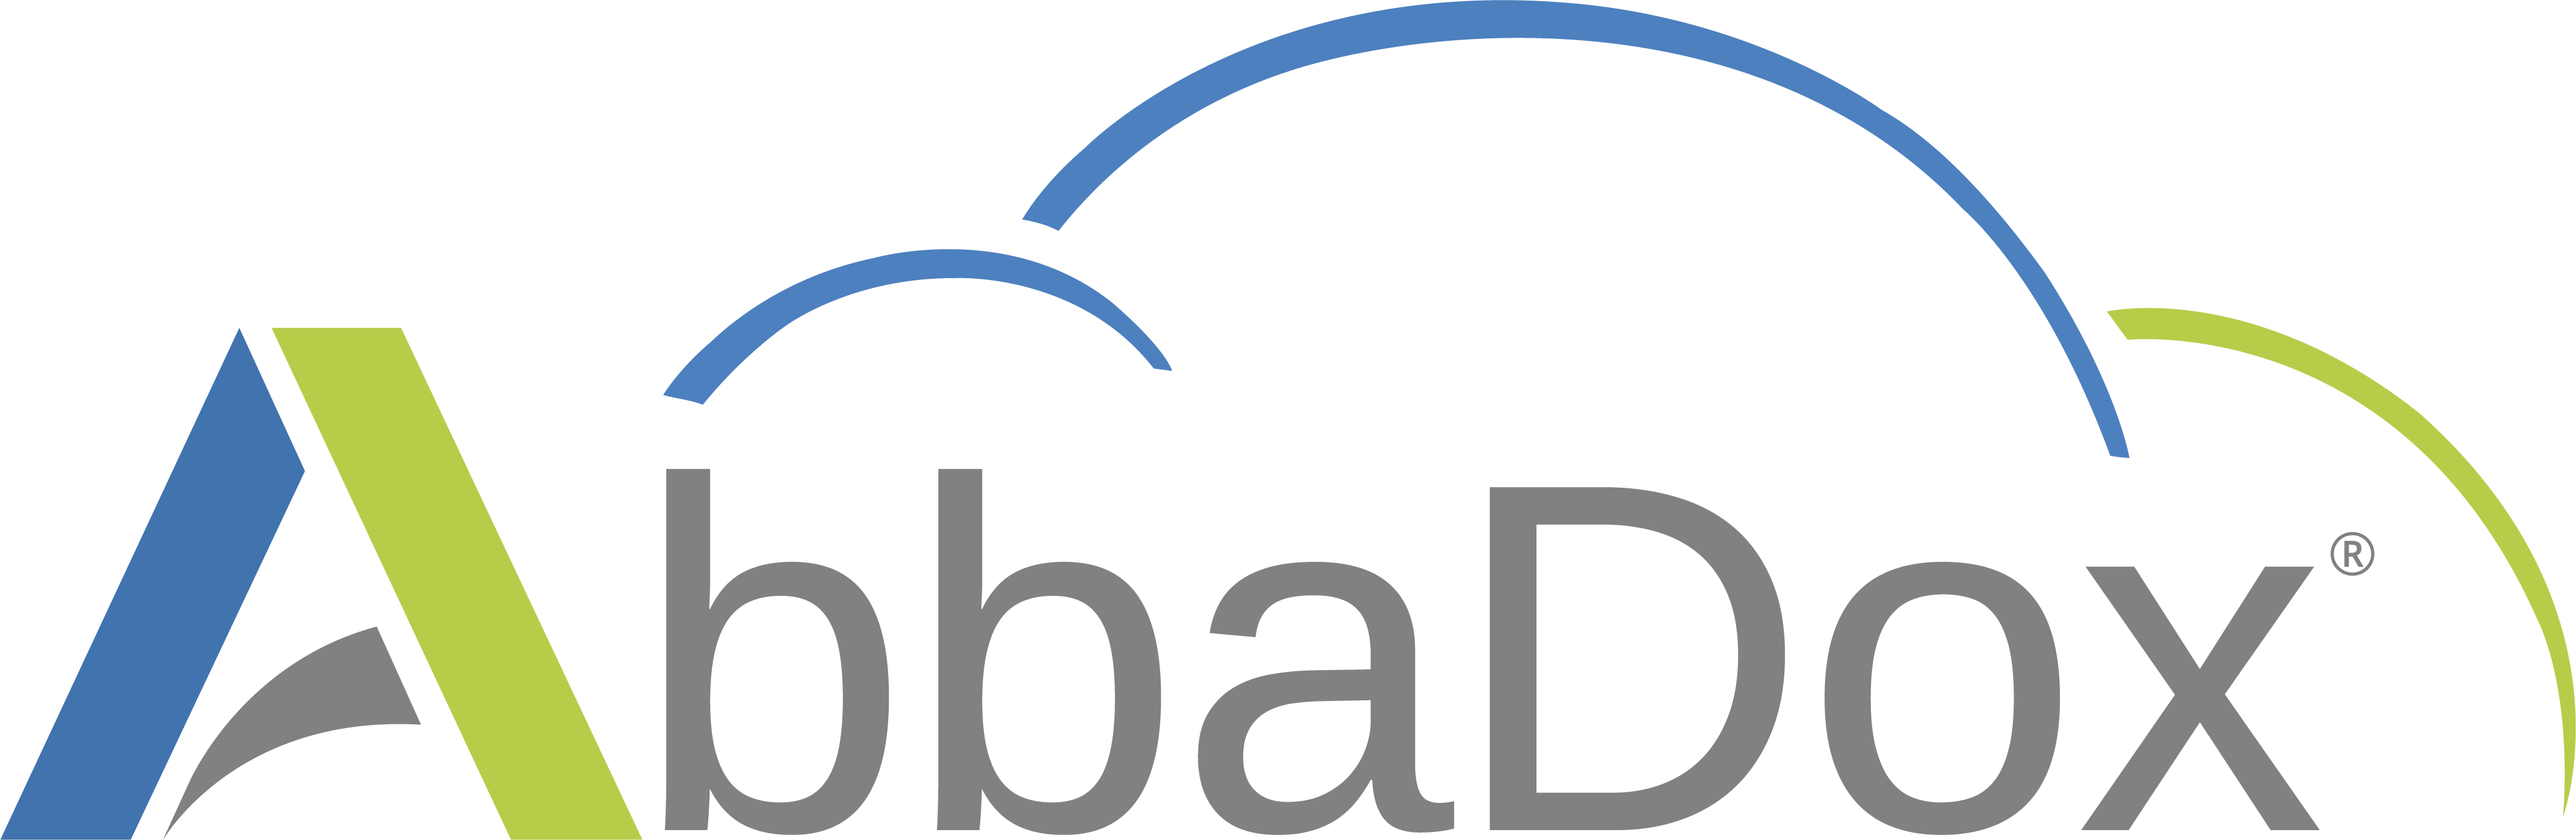 AbbaDox logo